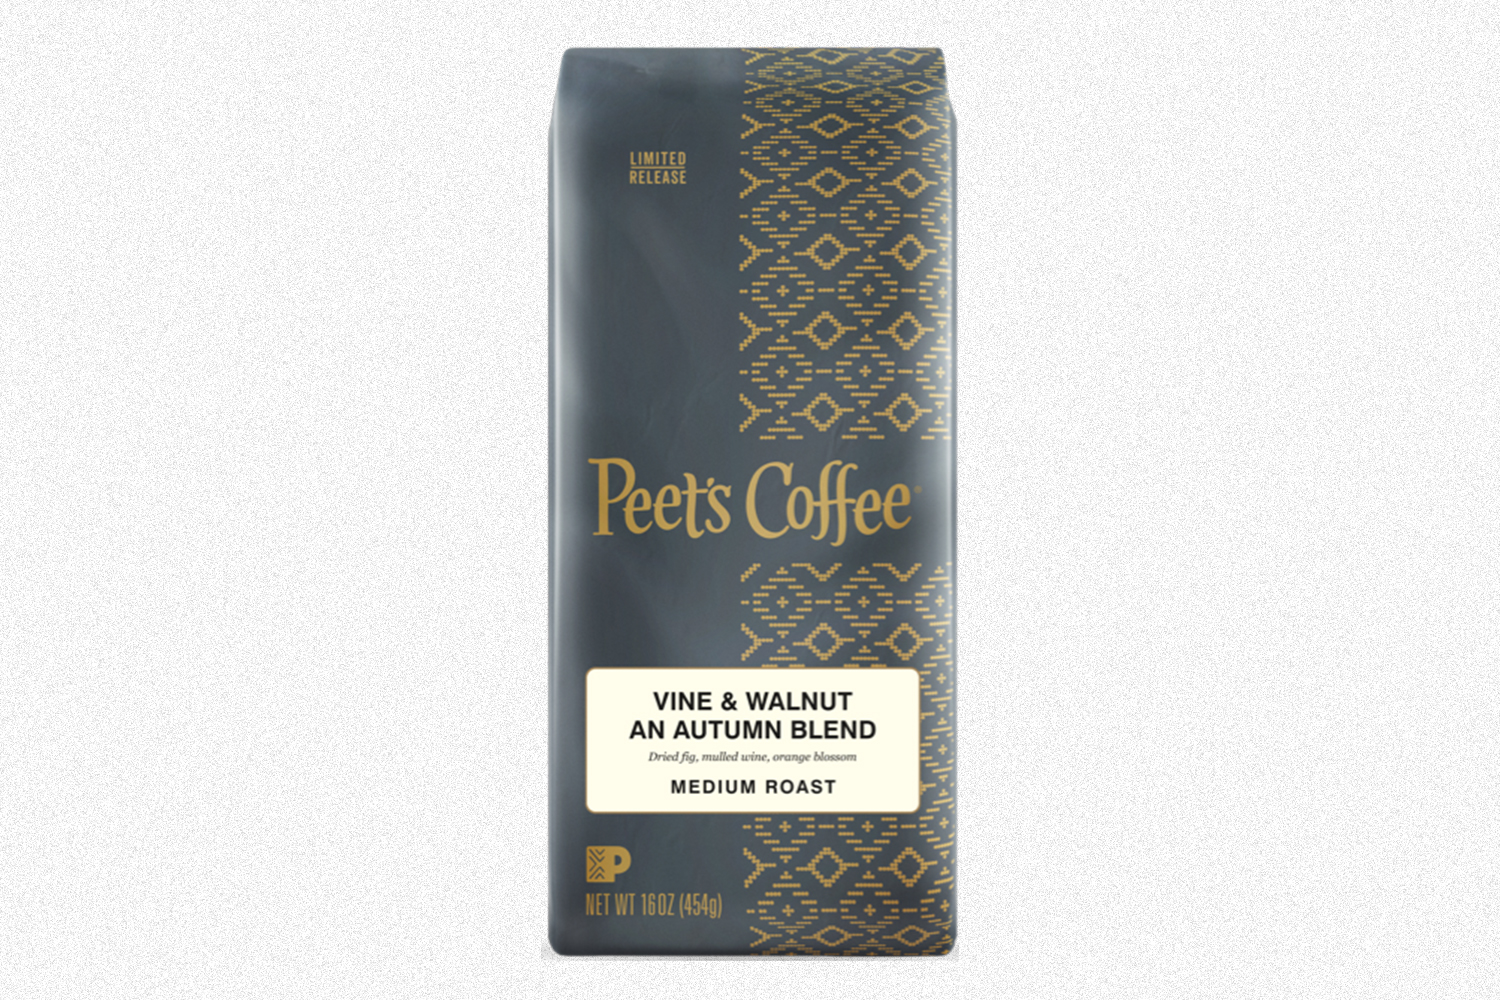 Peet's Coffee Vine & Walnut Autumn Blend coffee beans